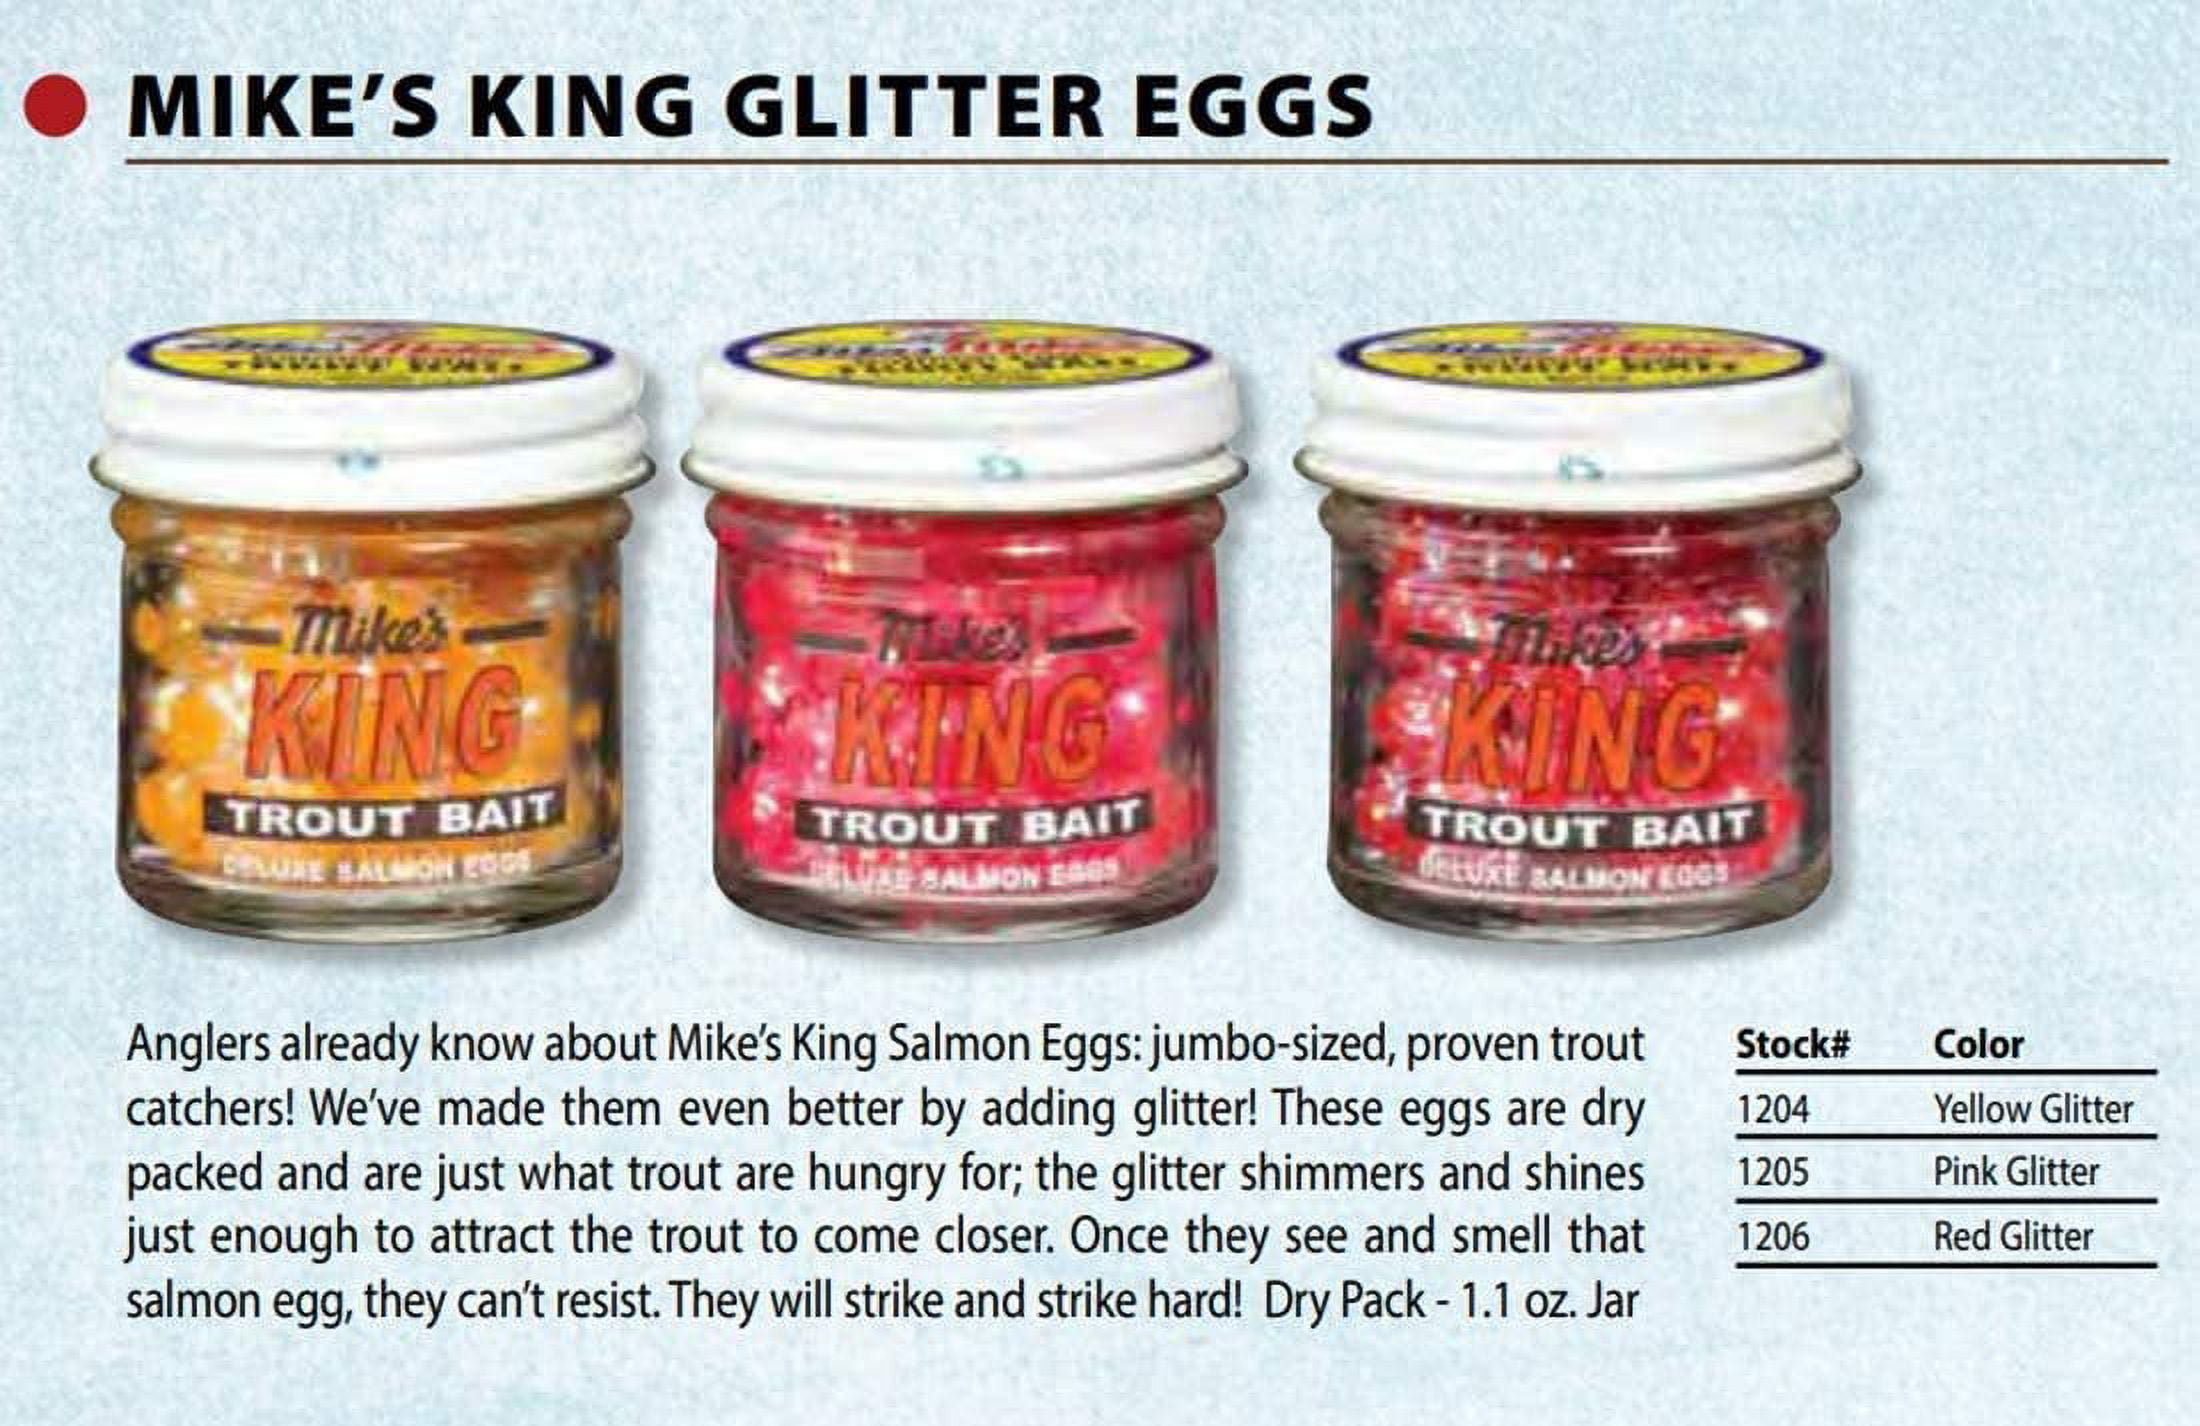 Atlas-Mike's King Salmon Eggs Trout Bait, Yellow Glitter, 1.6 oz., 1204 